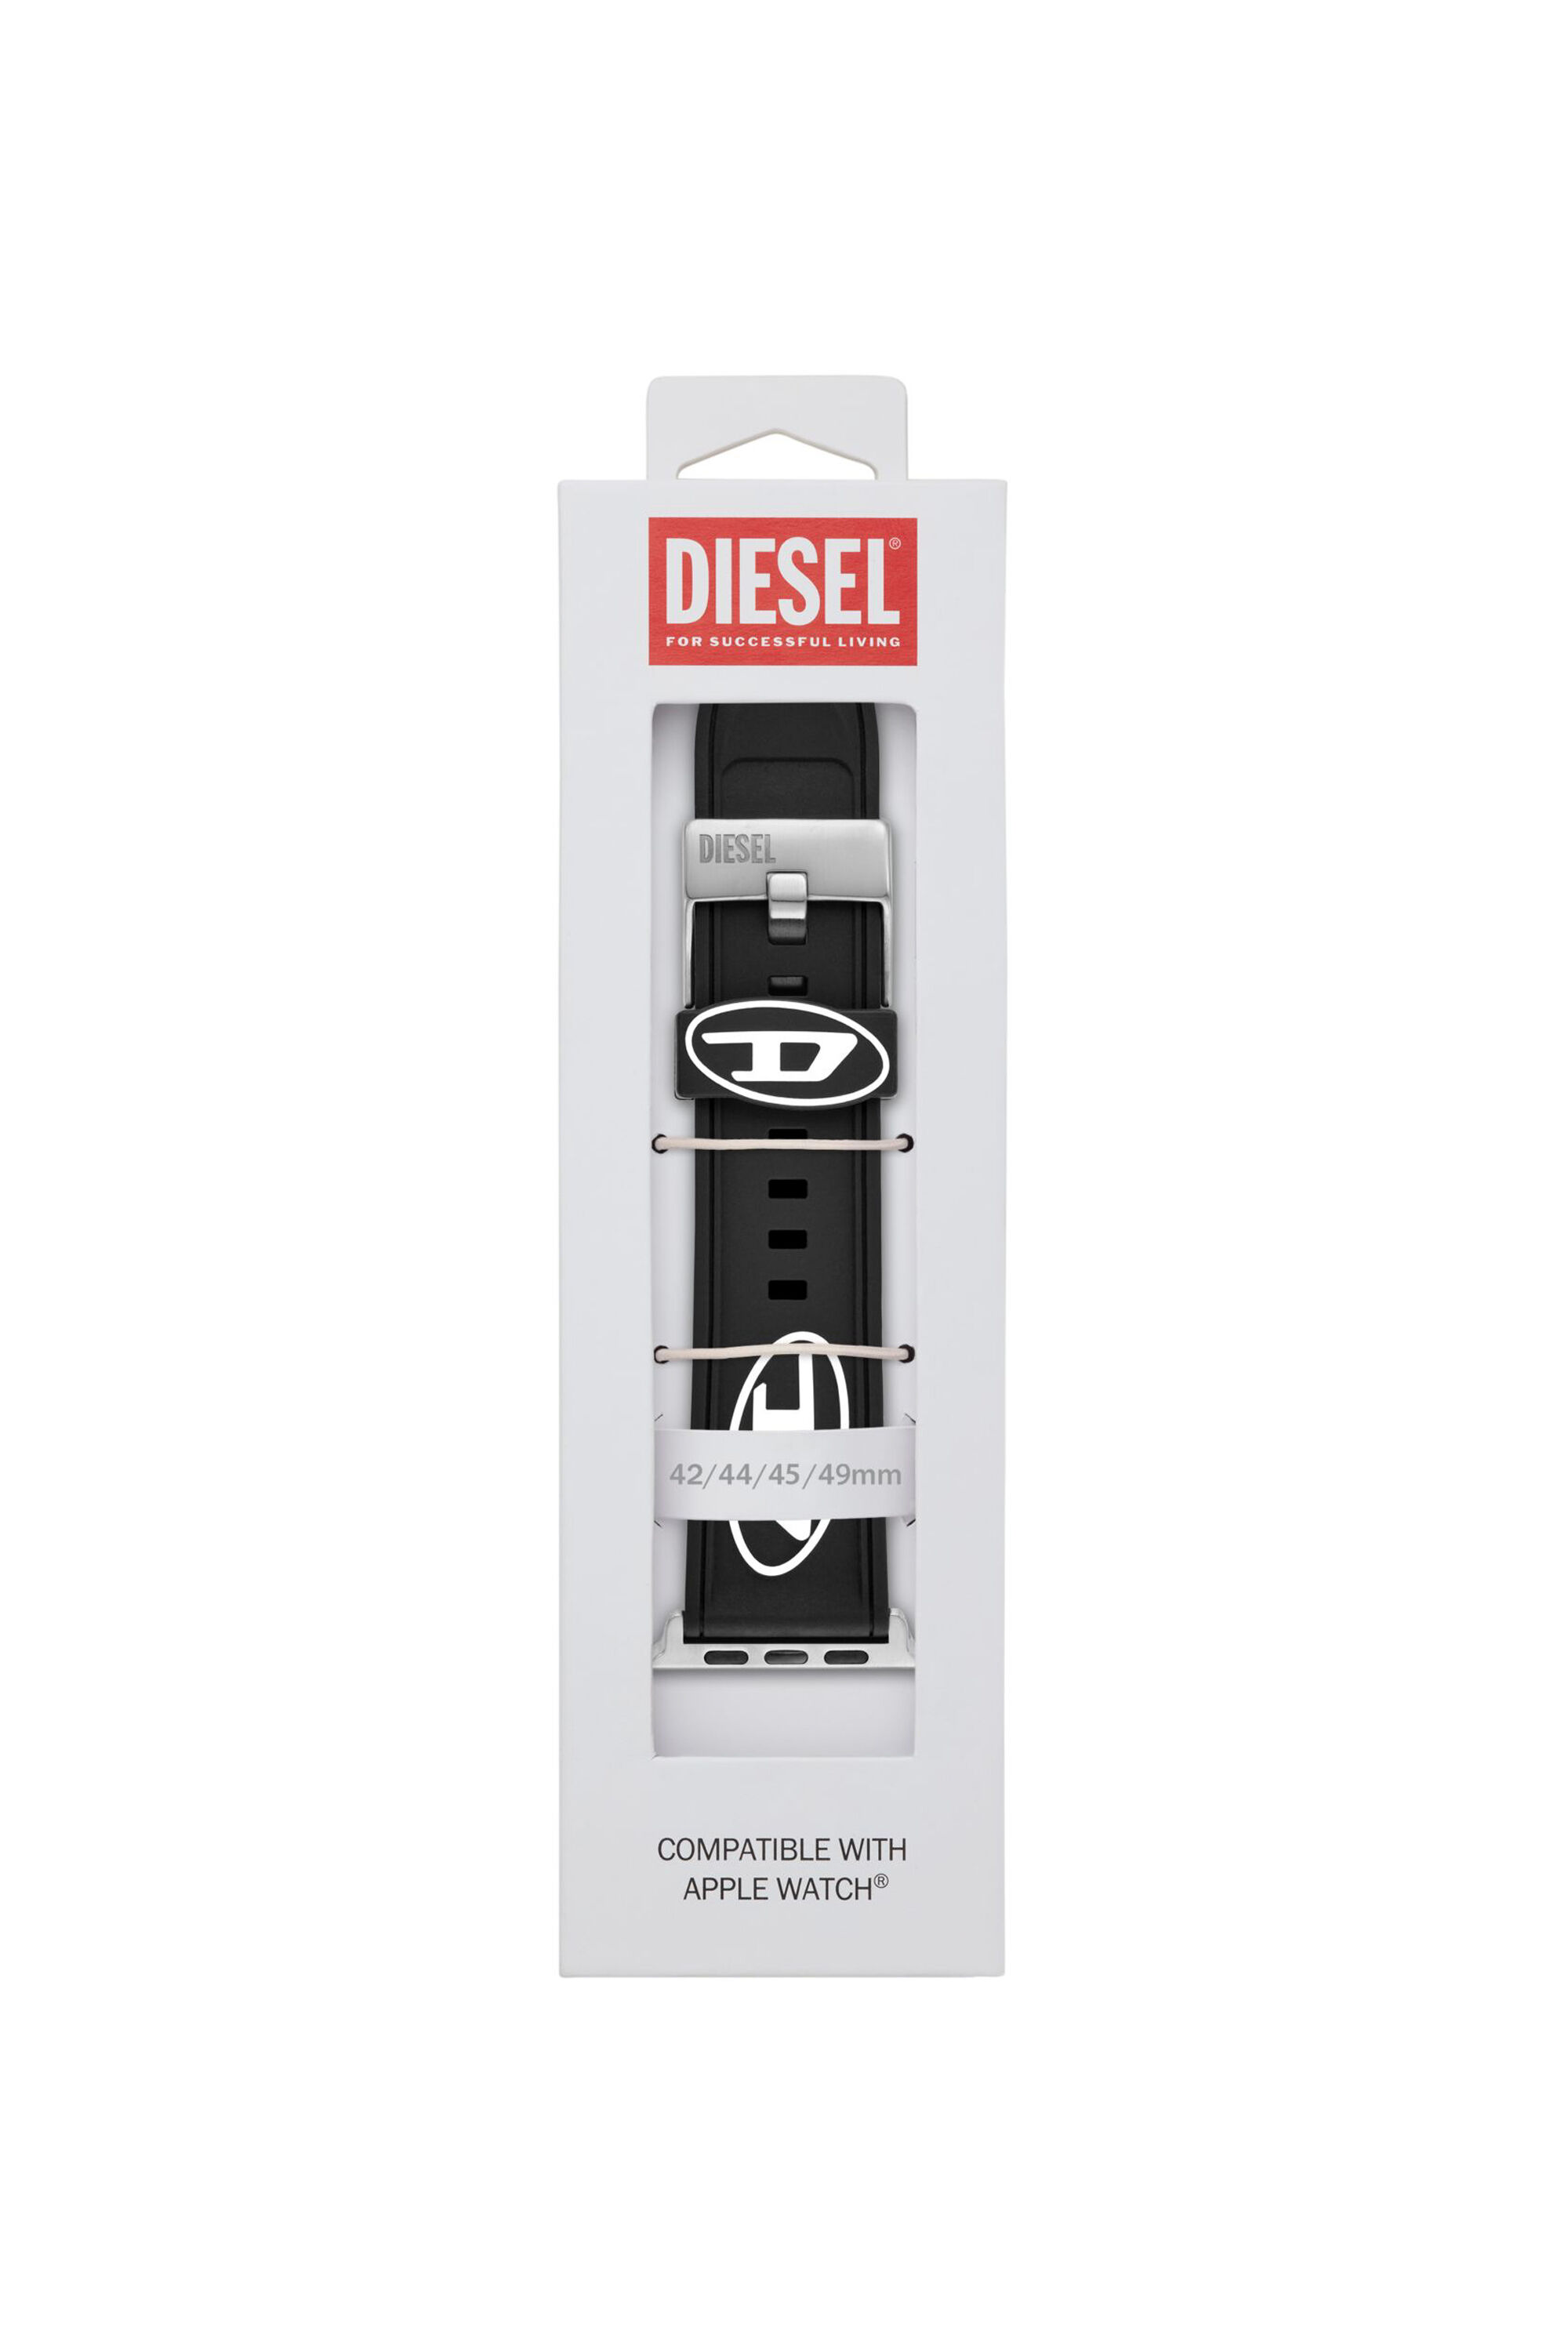 Diesel - DSS0018, ブラック - Image 3